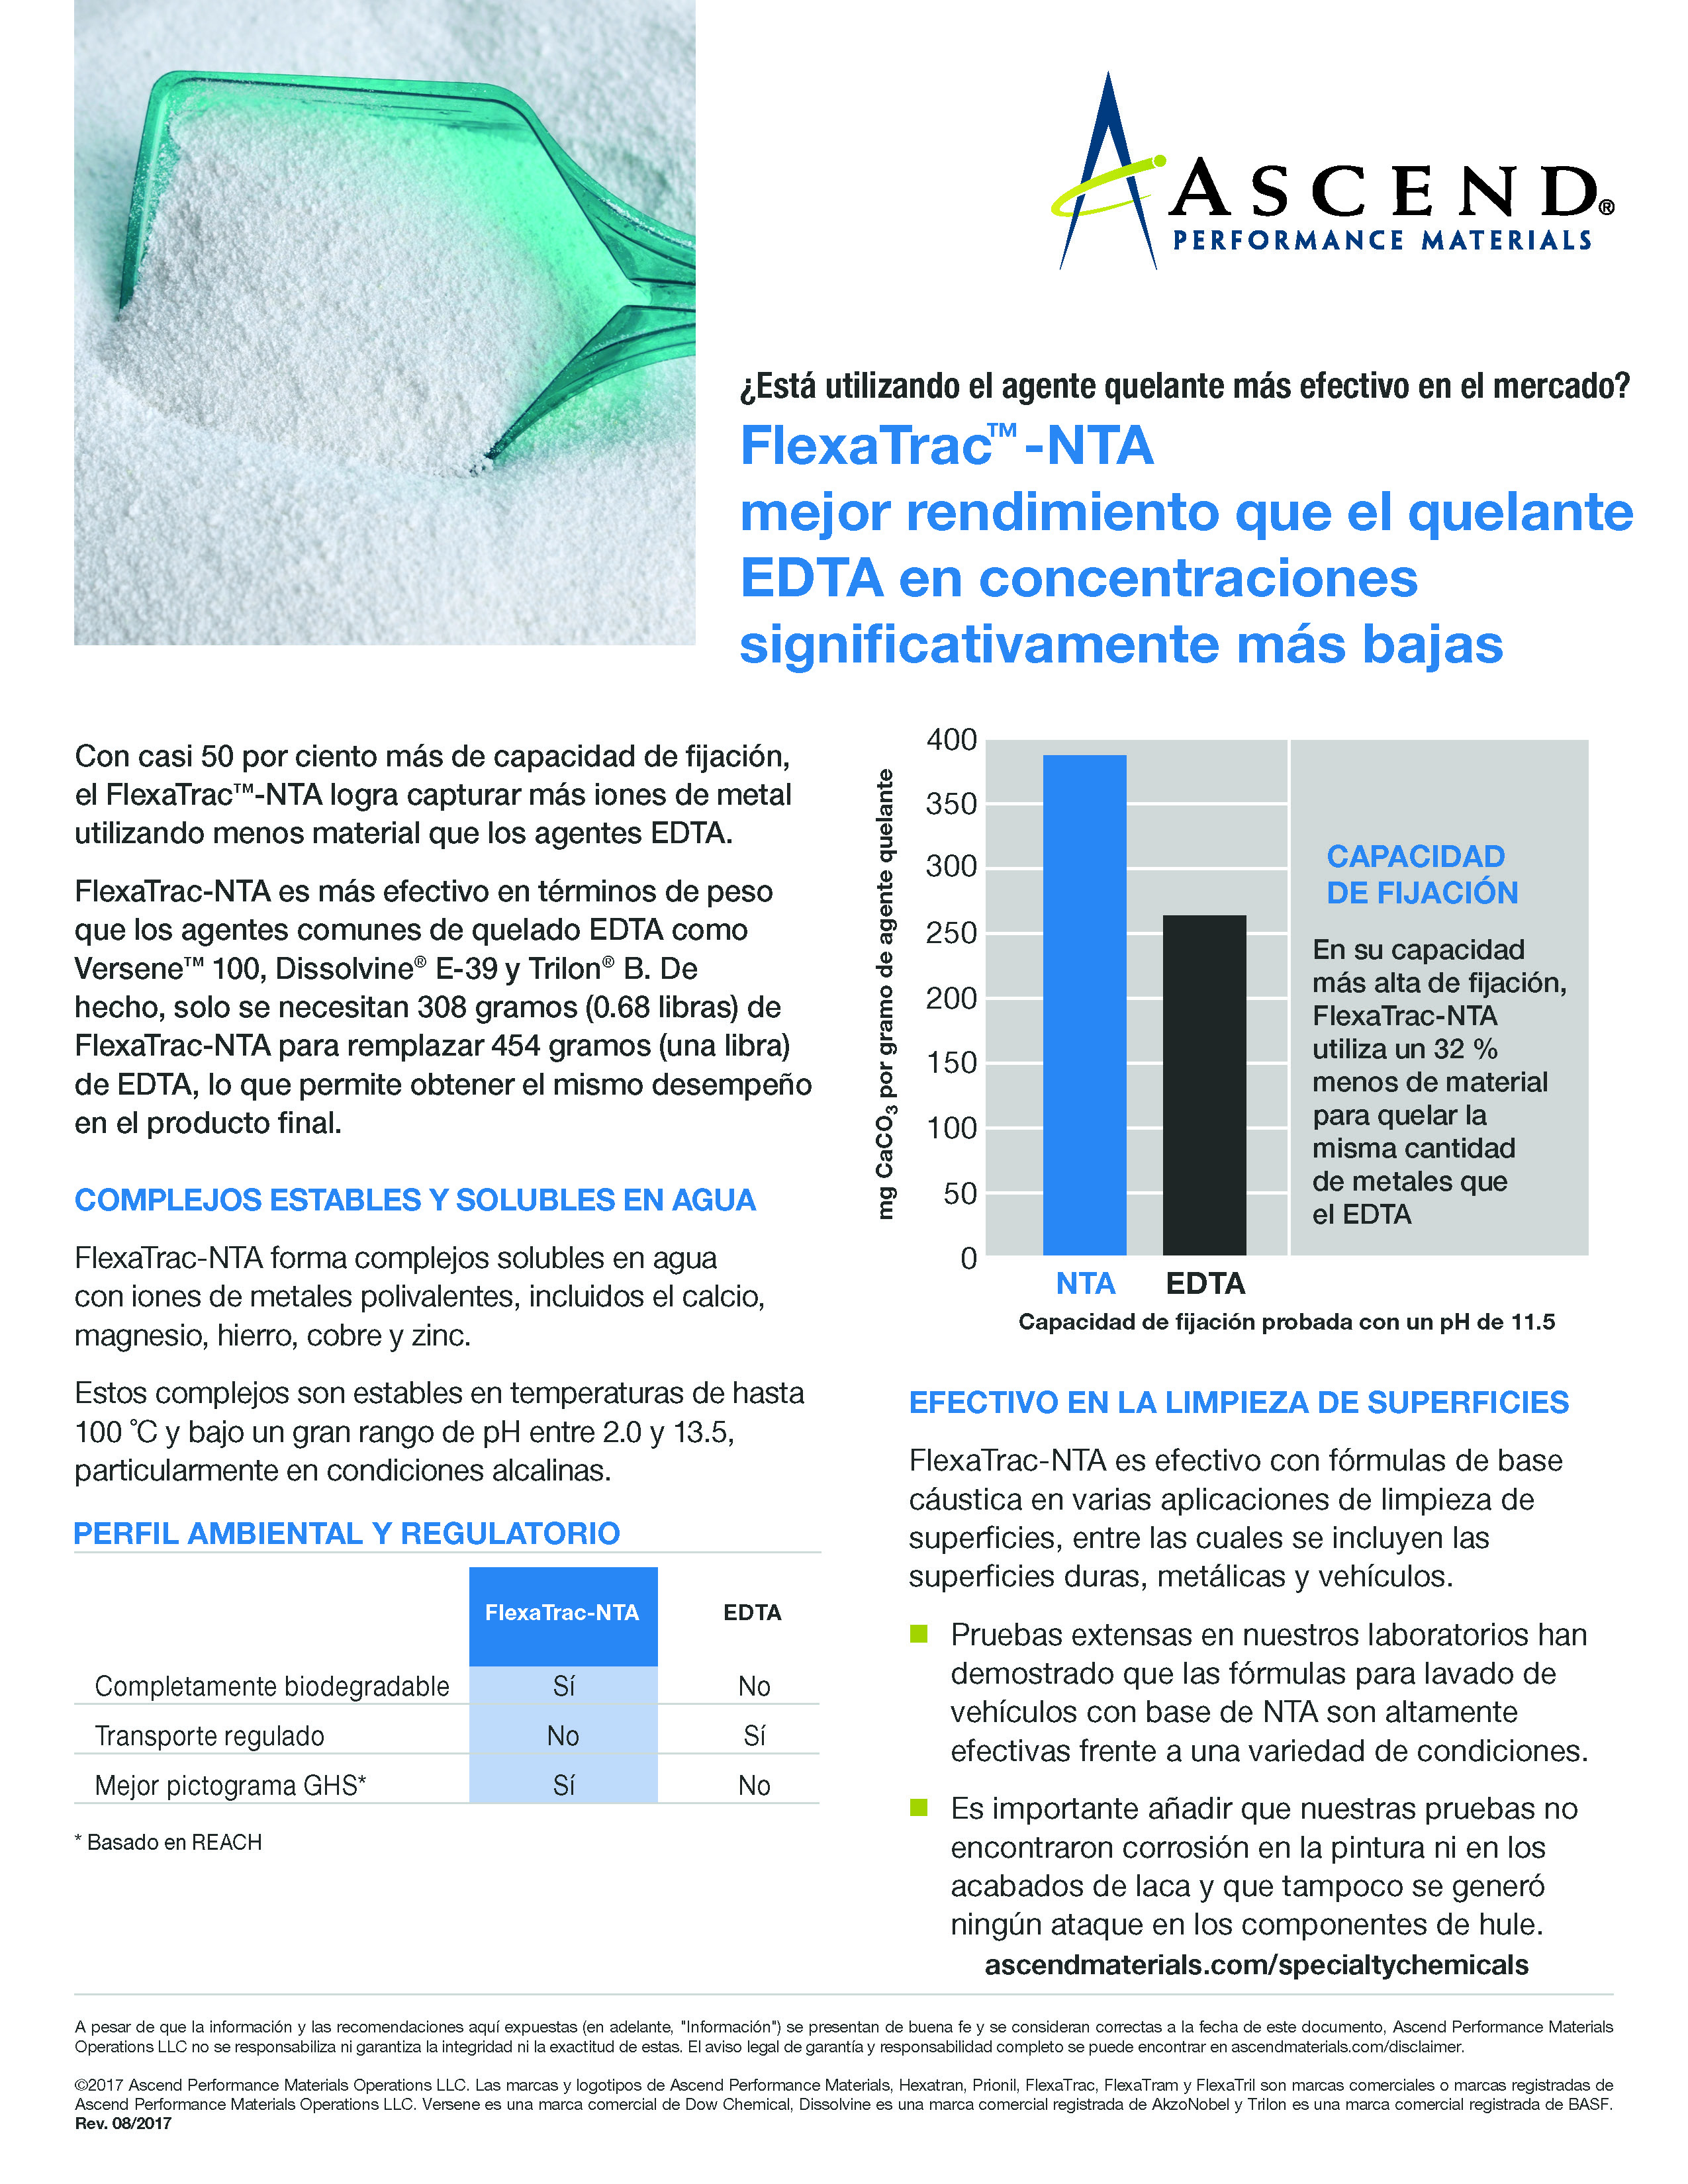 FlexaTrac®-NTA与EDTA